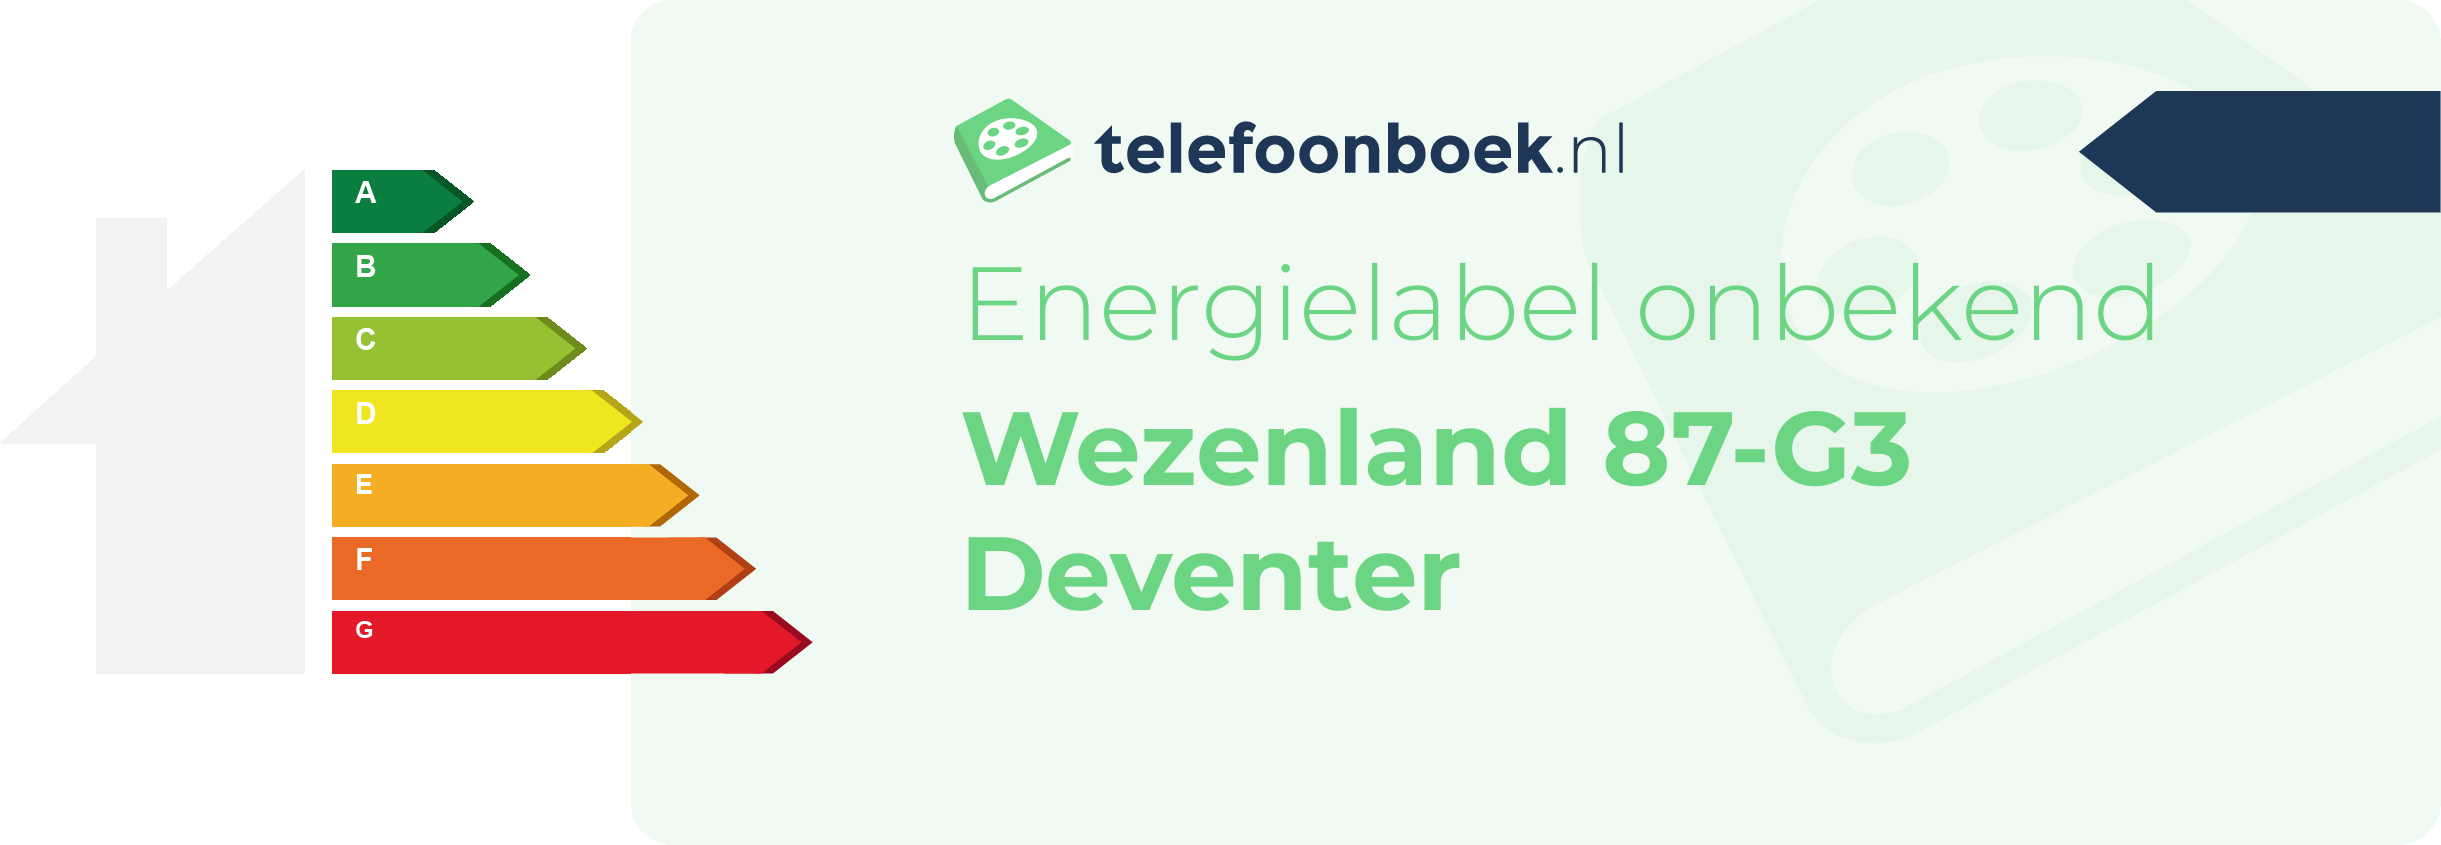 Energielabel Wezenland 87-G3 Deventer